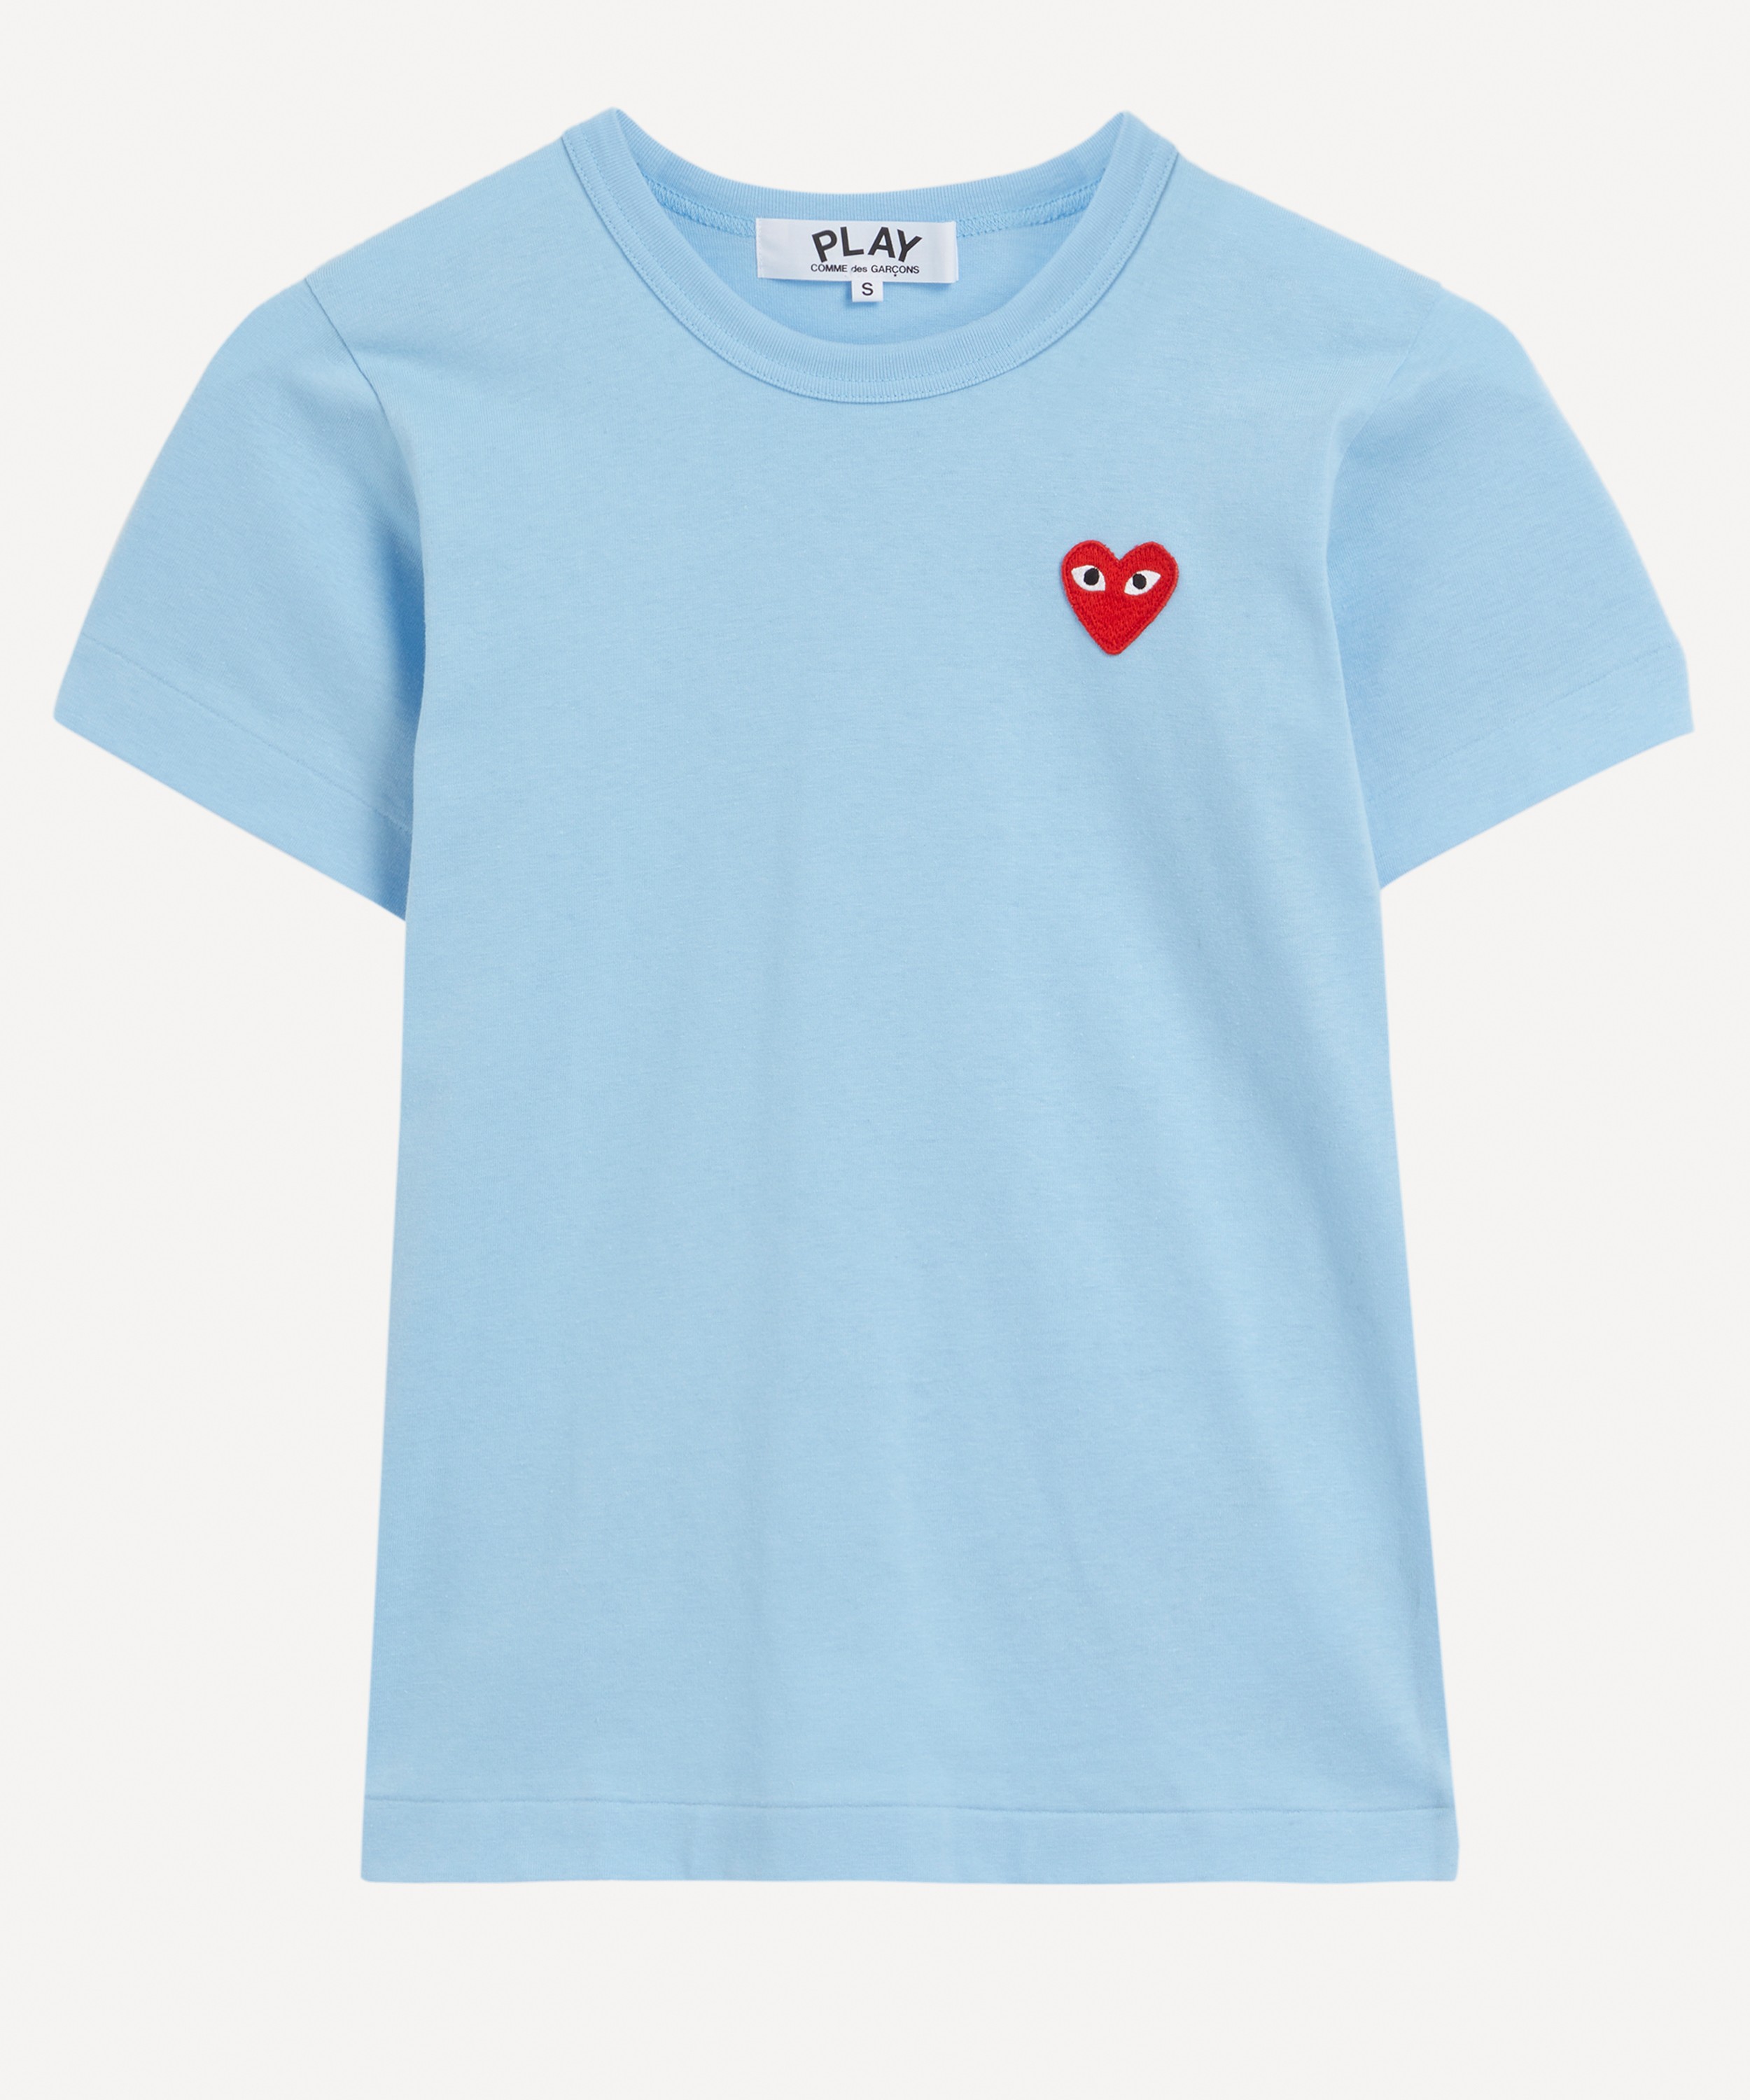 Comme des Garçons Play - Blue Heart Appliqué T-Shirt